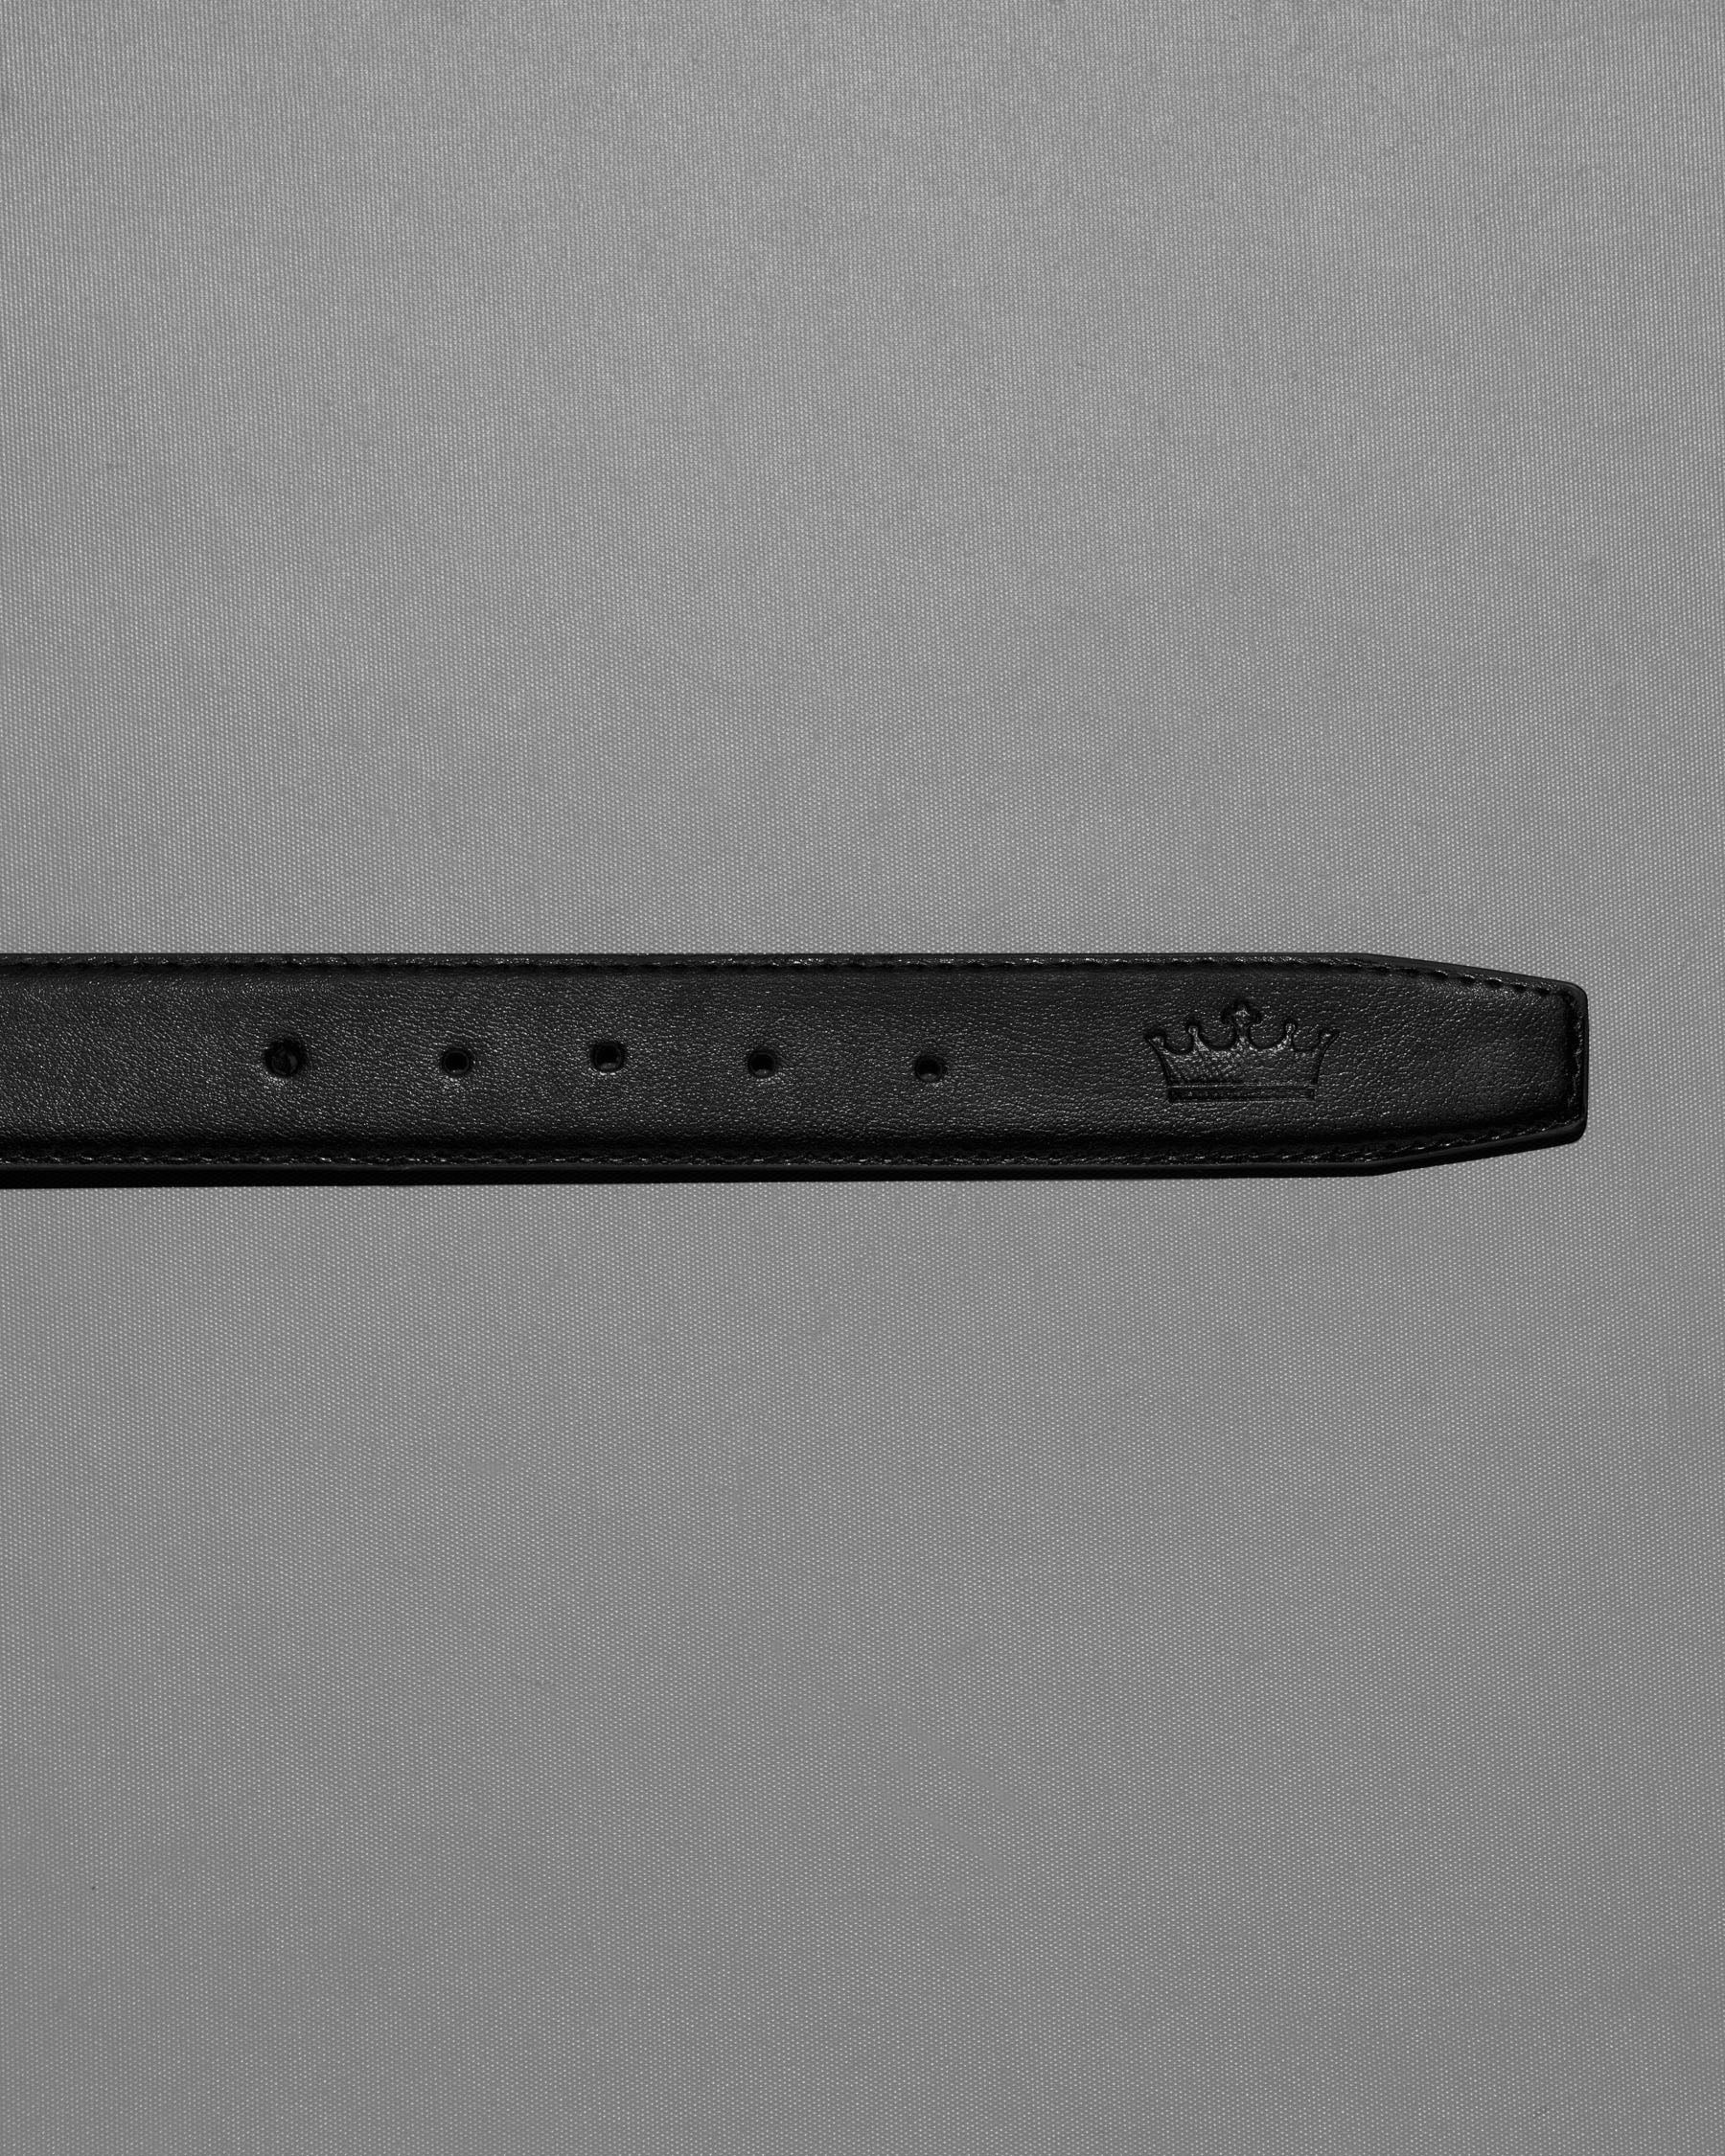 Silver Metallic Buckle with Jade Black and Brown Leather Free Handcrafted Reversible Belt BT070-28, BT070-30, BT070-32, BT070-34, BT070-36, BT070-38